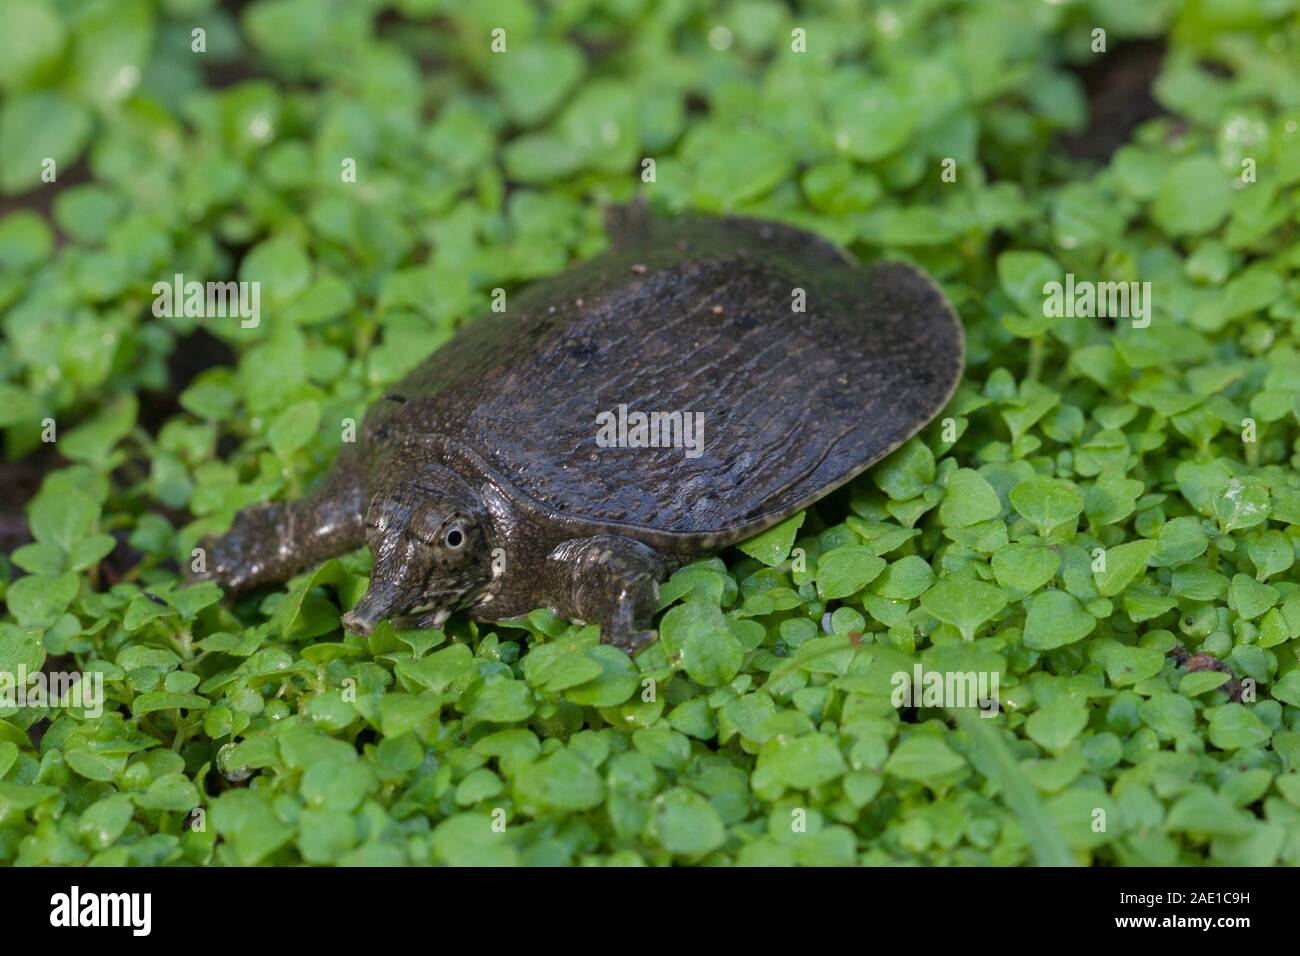 Common softshell turtle or asiatic softshell turtle (Amyda cartilaginea) Stock Photo